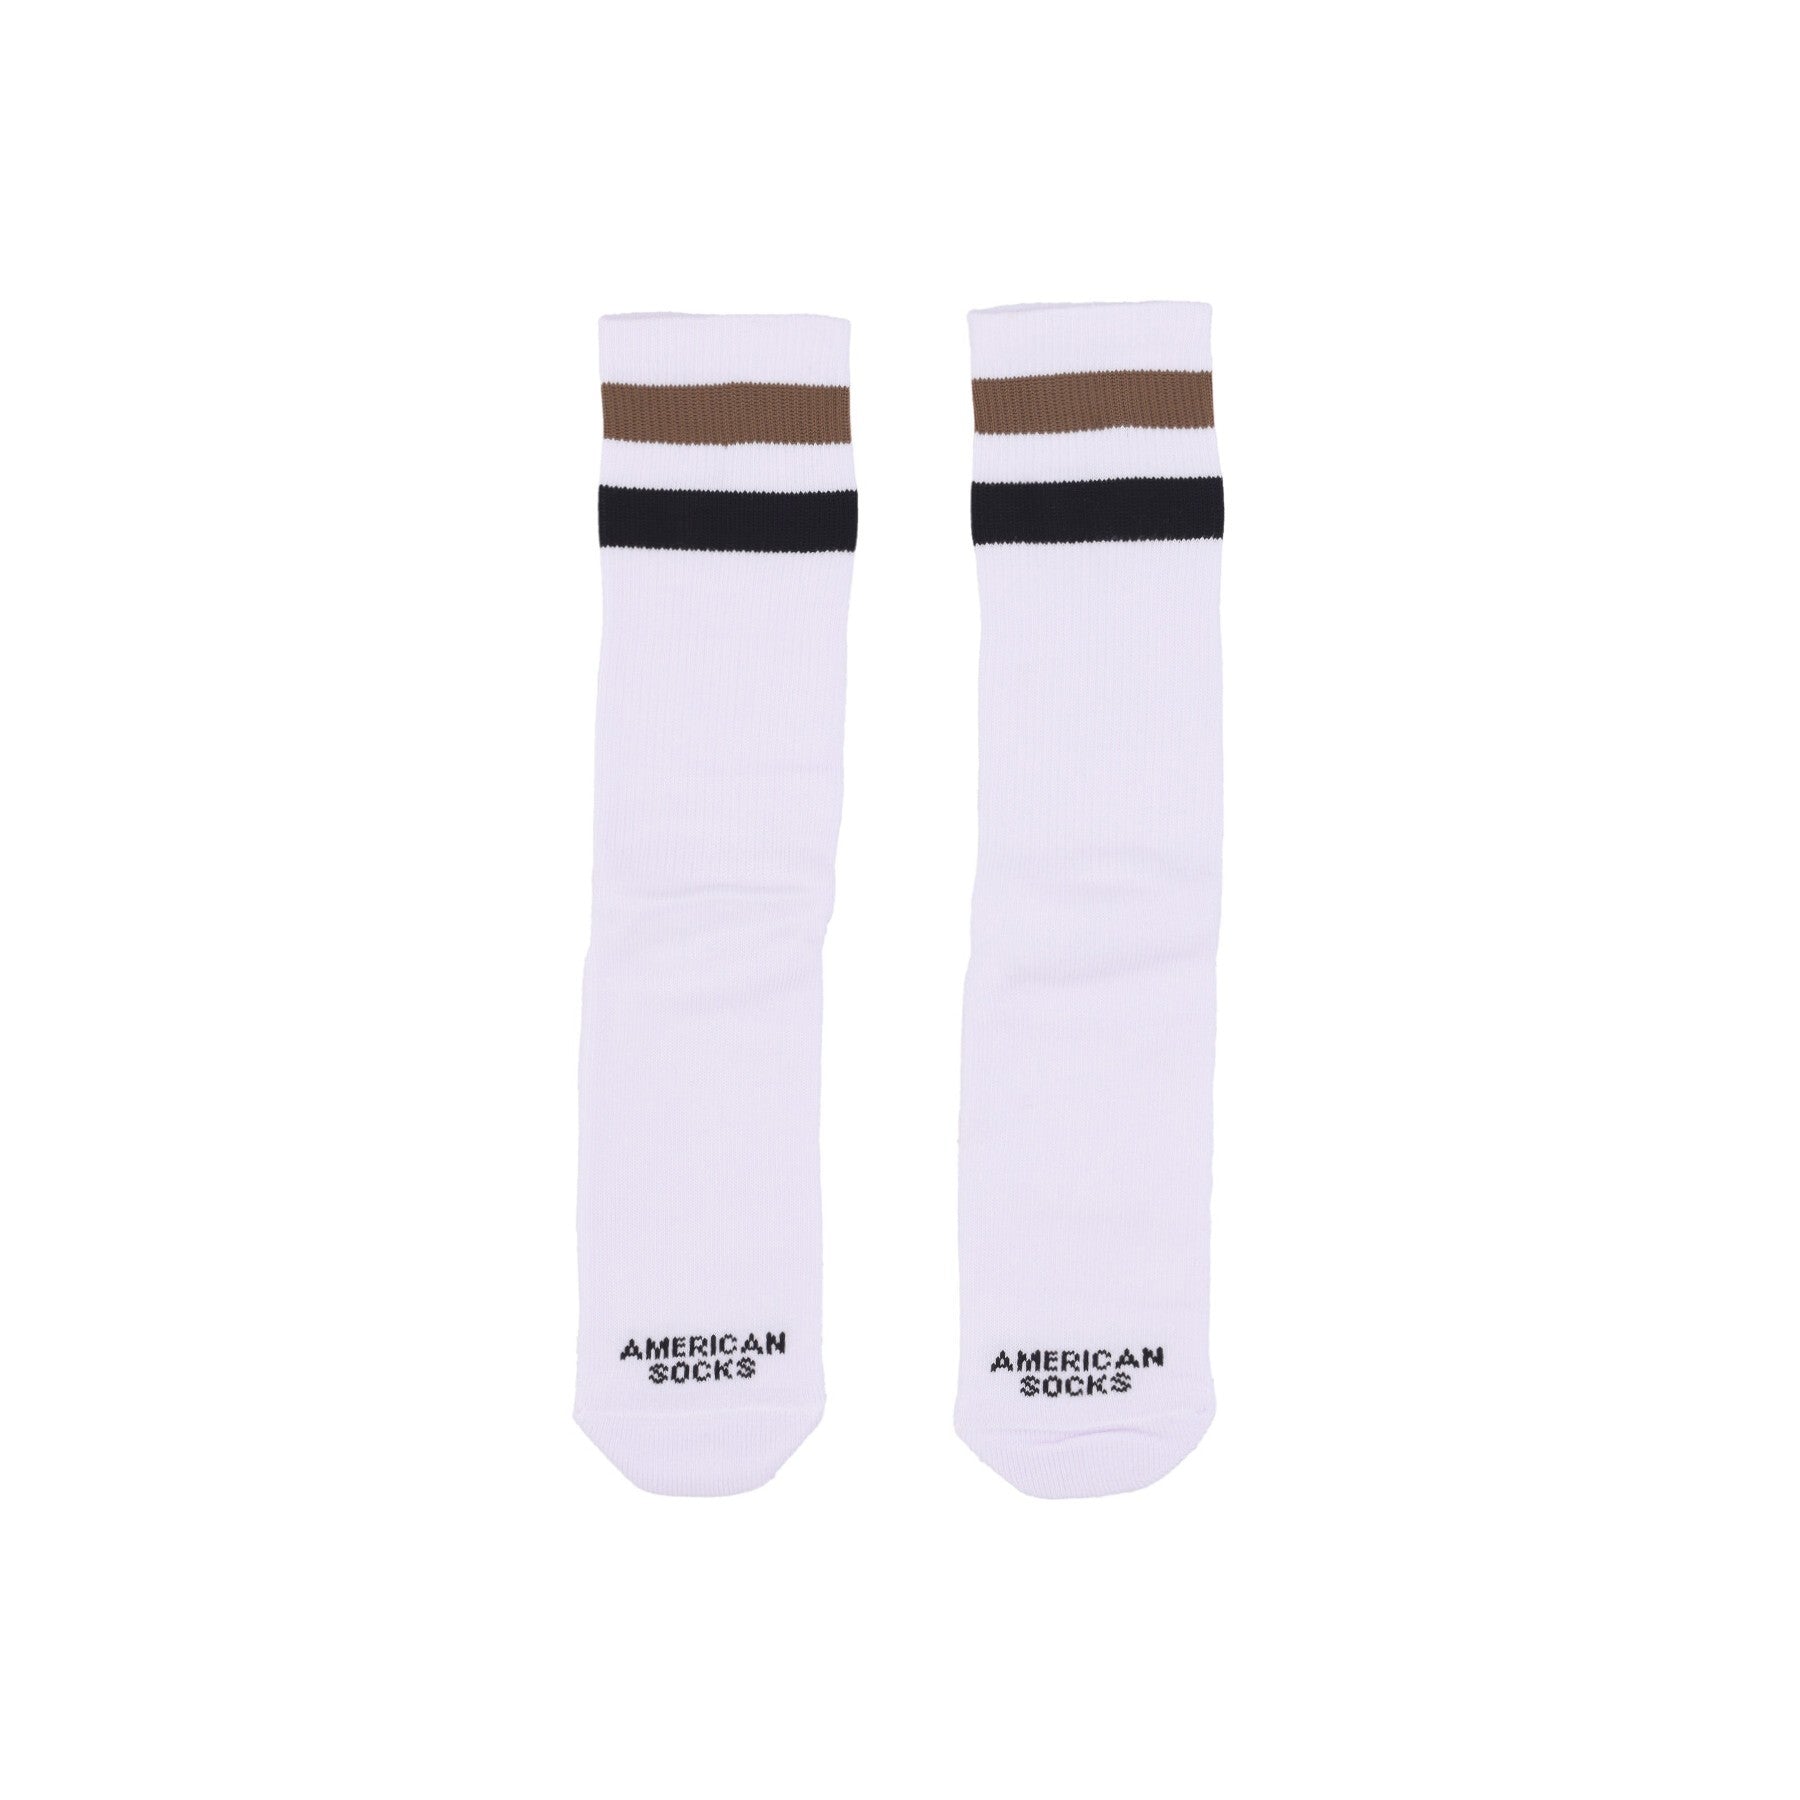 American Socks, Calza Media Uomo Mid High Gizmo, White/brown